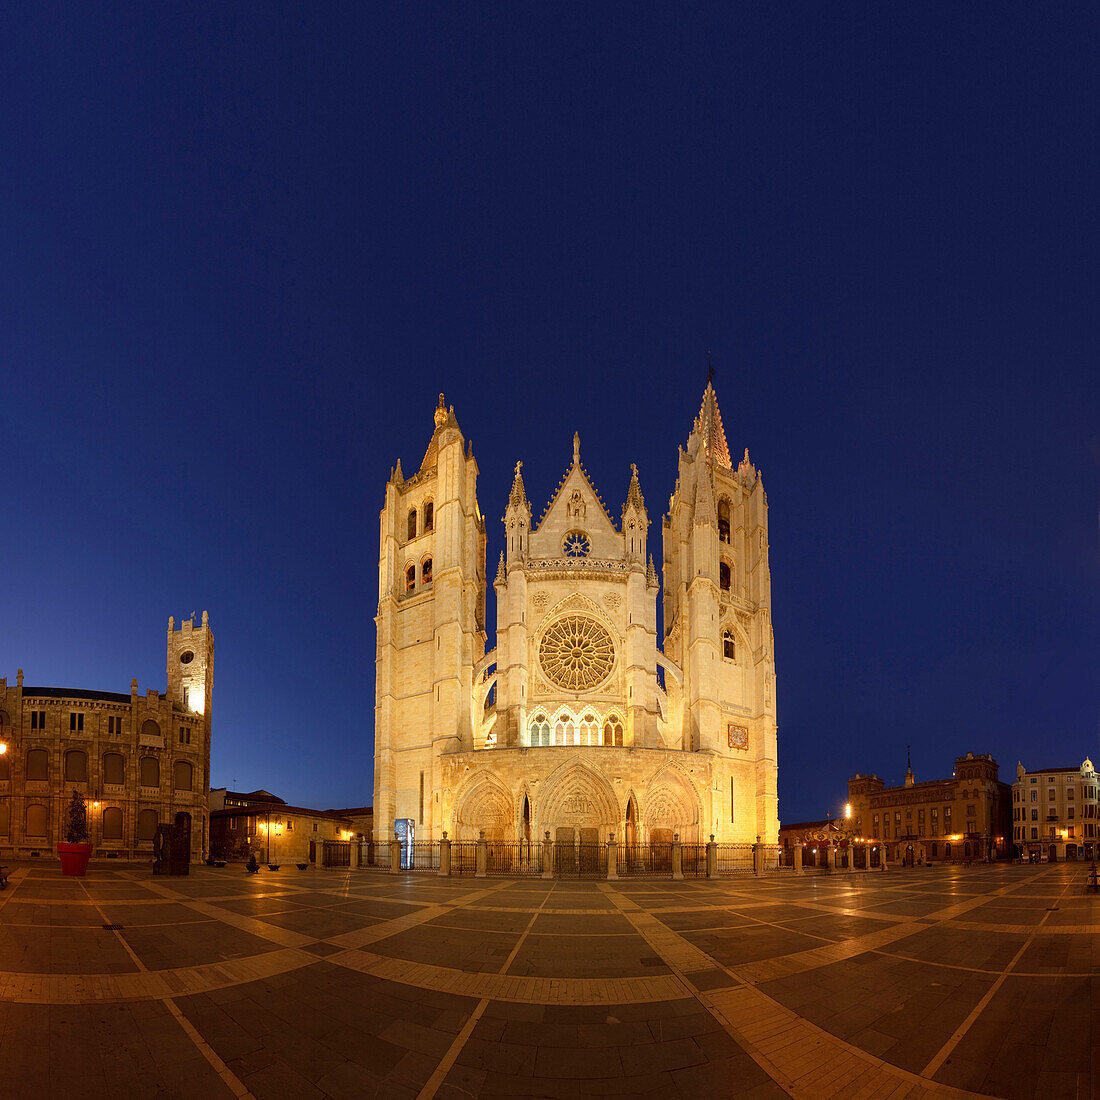 The illuminated cathedral Santa Maria de Regla at night, Leon, Province of Leon, Old Castile, Castile-Leon, Castilla y Leon, Northern Spain, Spain, Europe